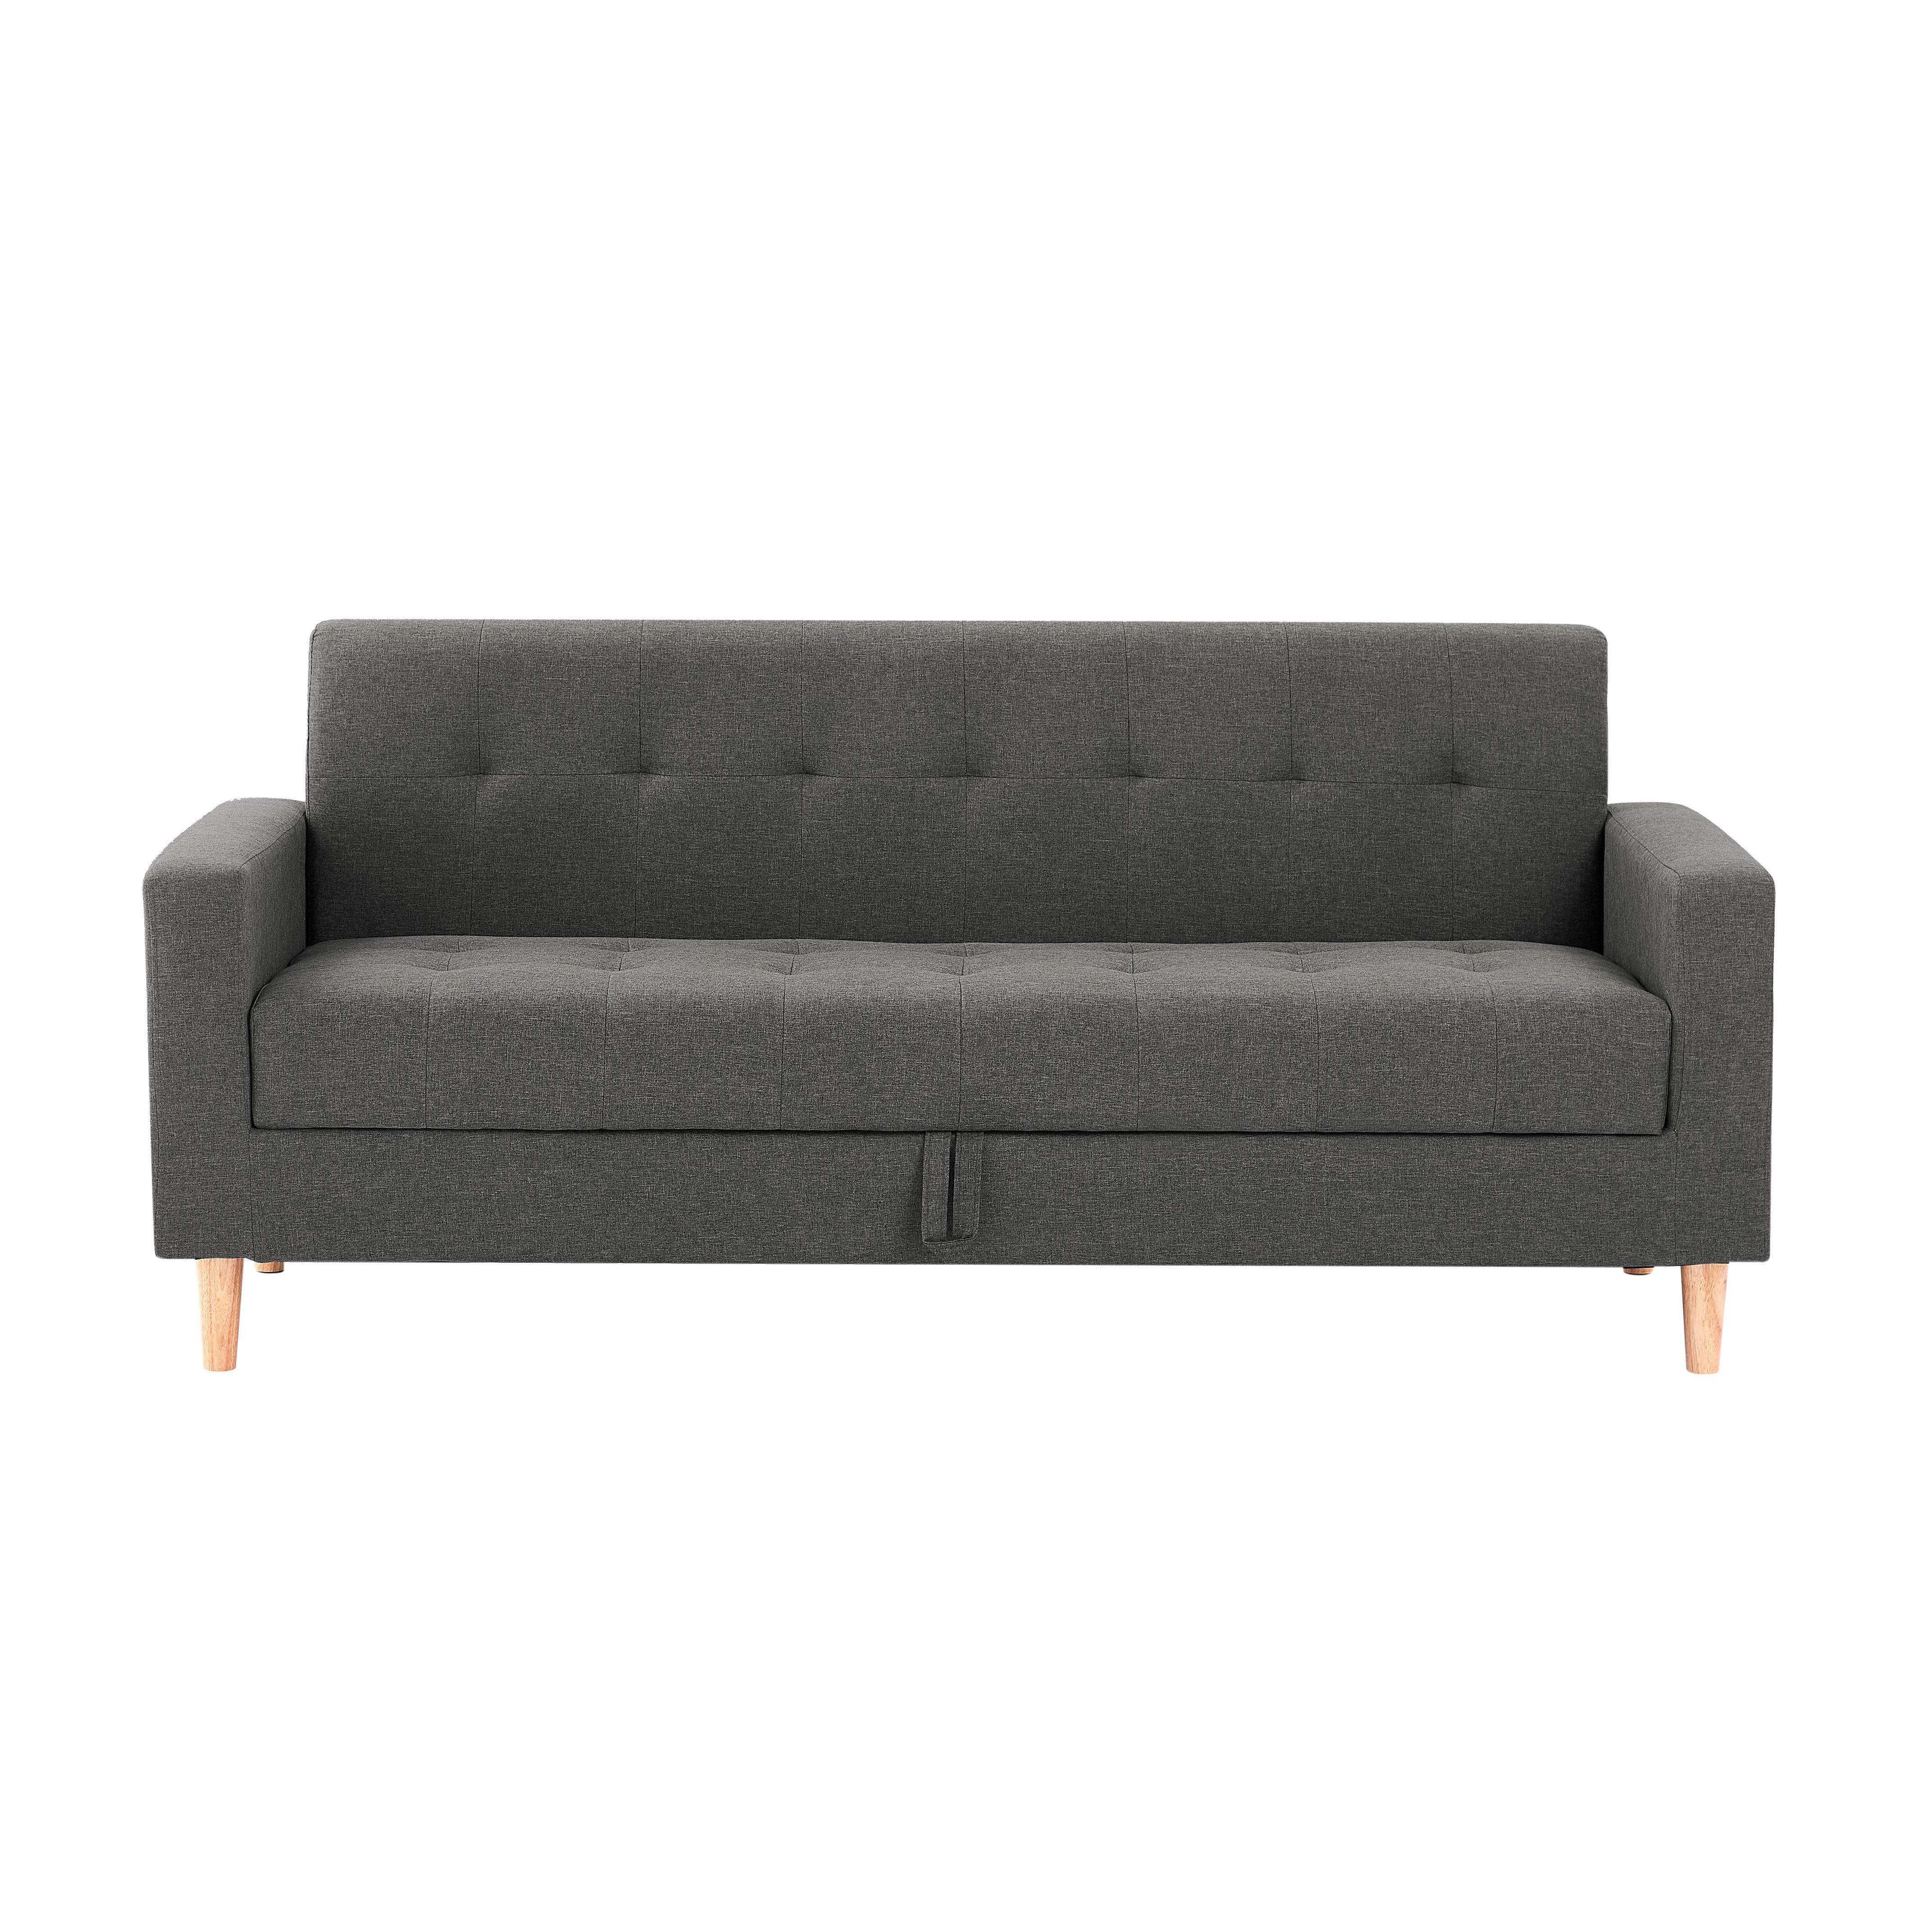 Modern Smart Sofa in a Box, Grey Fabric Sofa with Hidden Storage - image 1